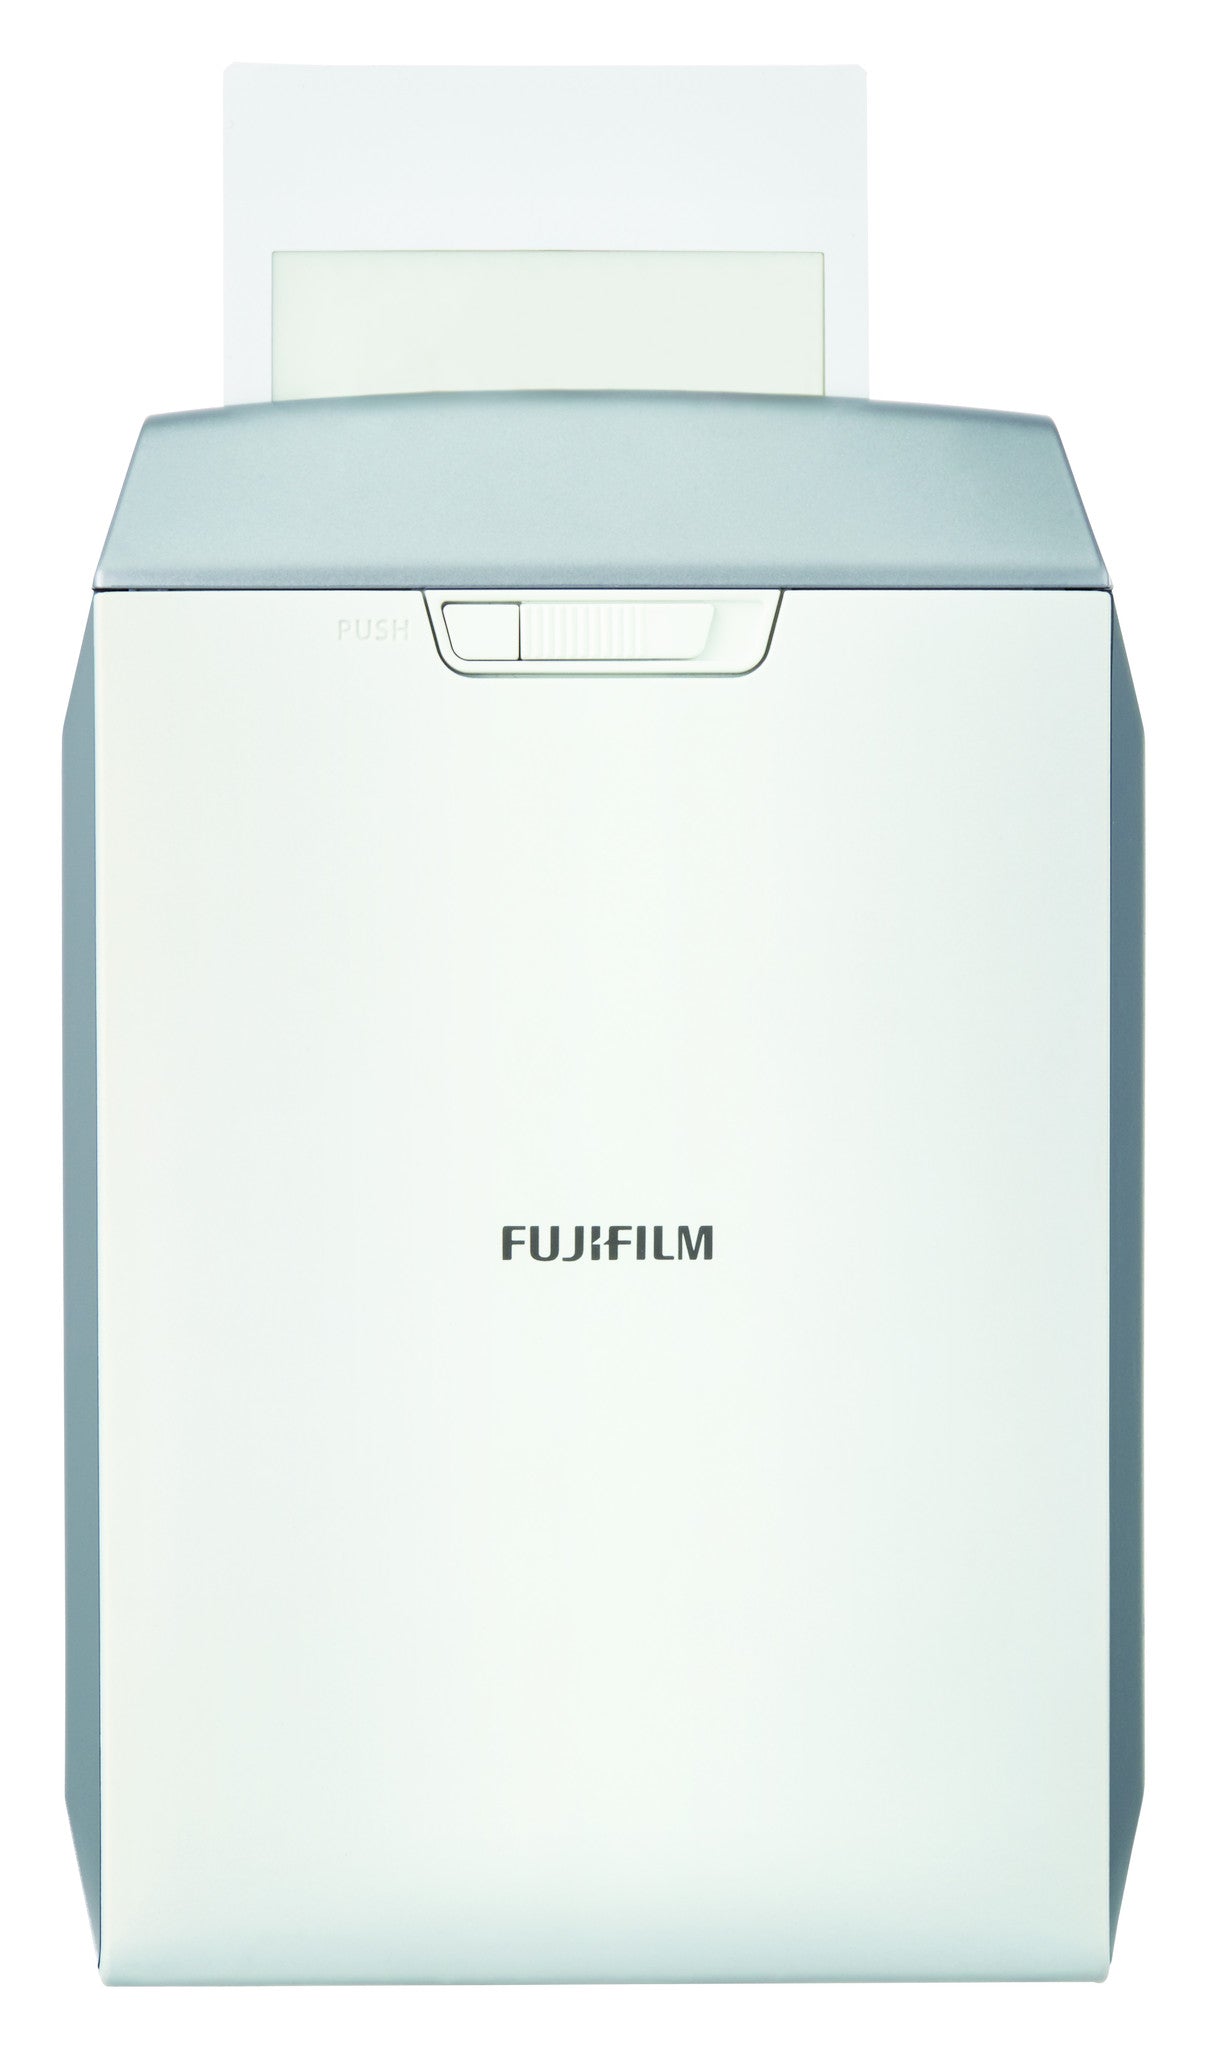 Fujifilm INSTAX Share Smartphone Printer SP-2 Silver